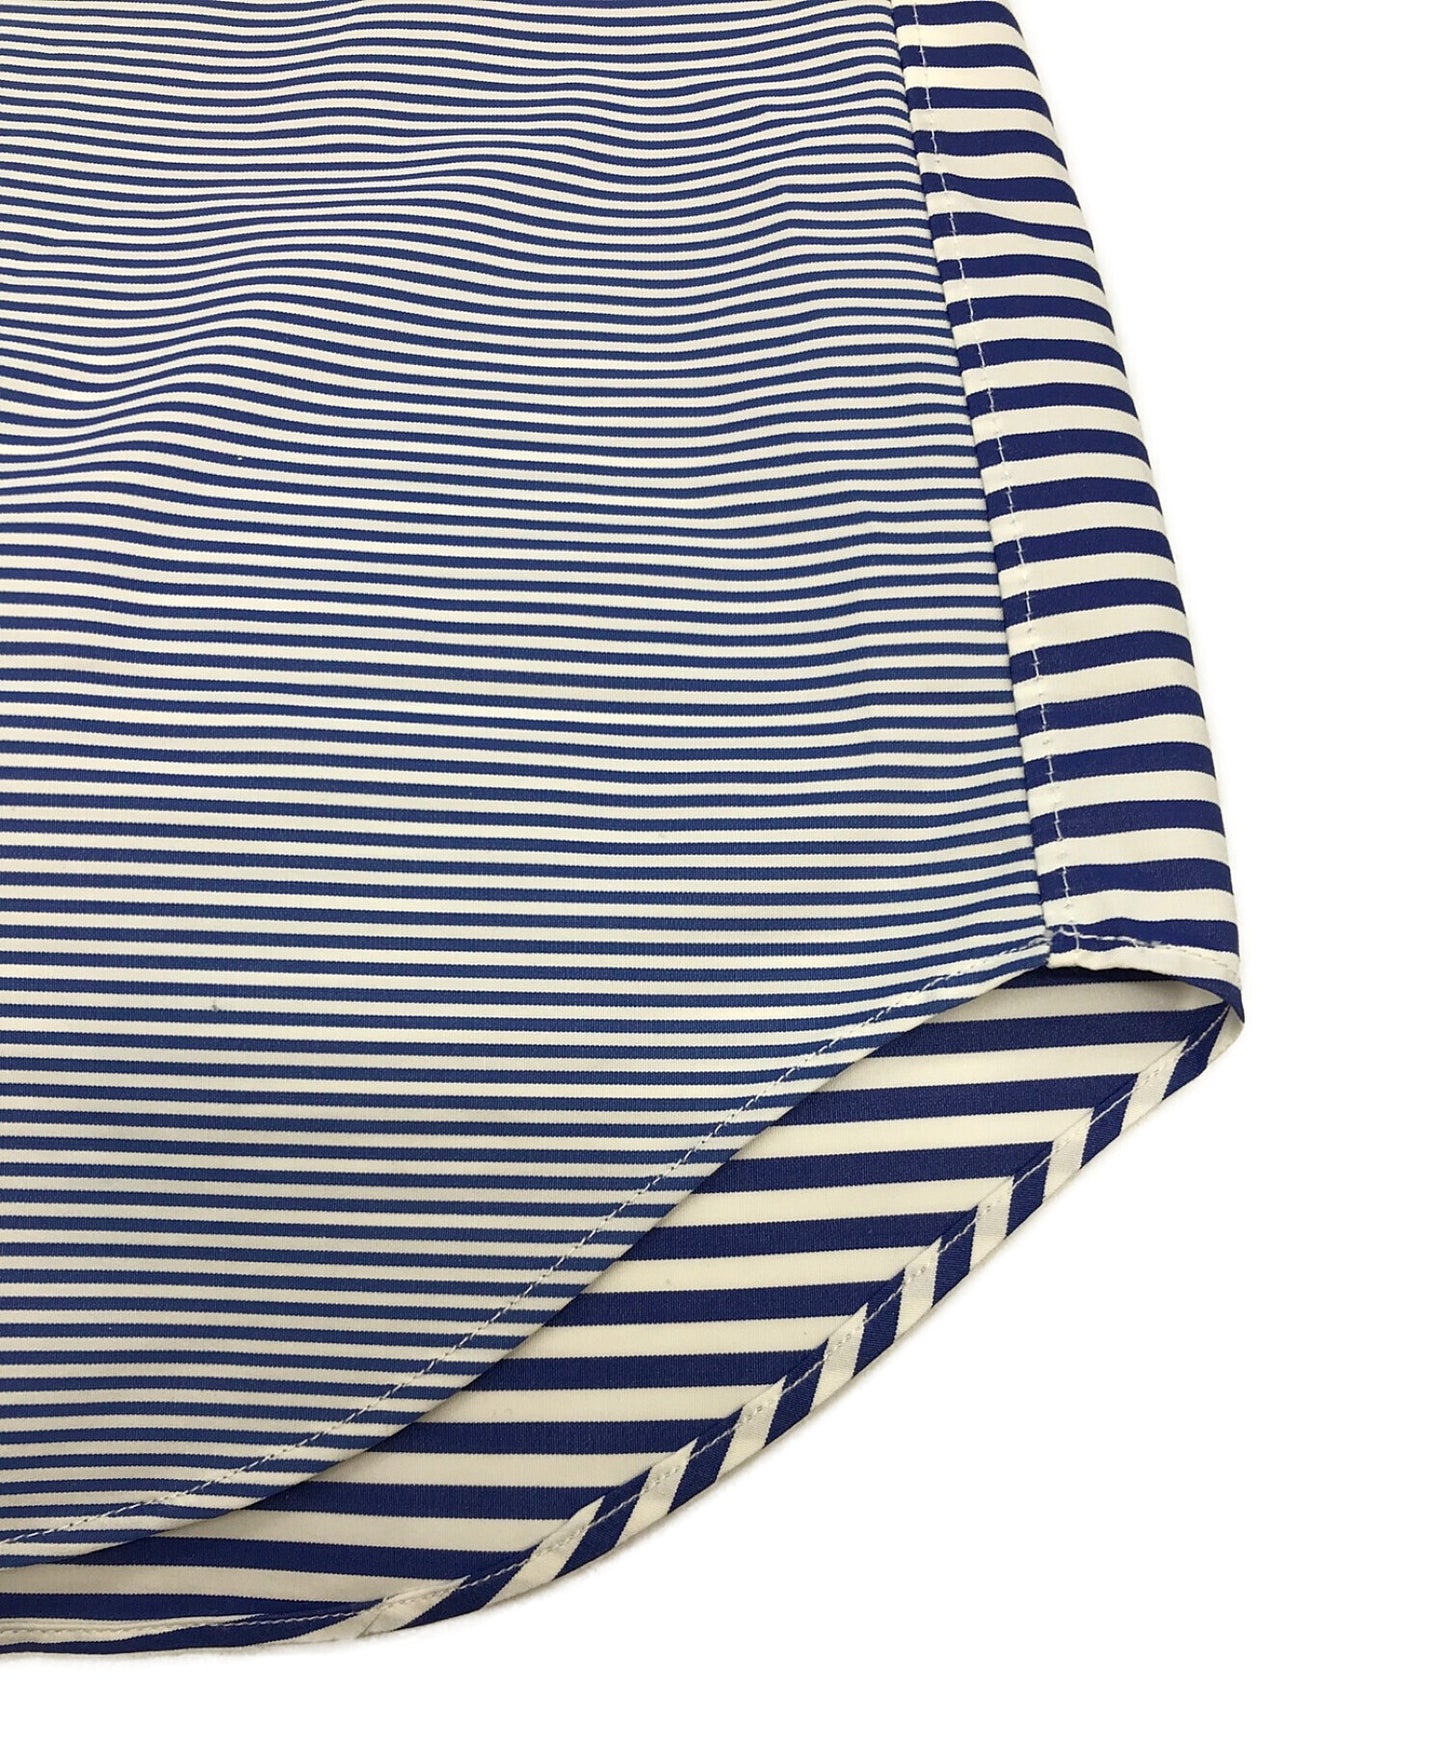 [Pre-owned] COMME des GARCONS SHIRT Cutaway striped shirt Striped shirt Striped shirt Long-sleeved shirt Shirt FZ-B119-PER-1